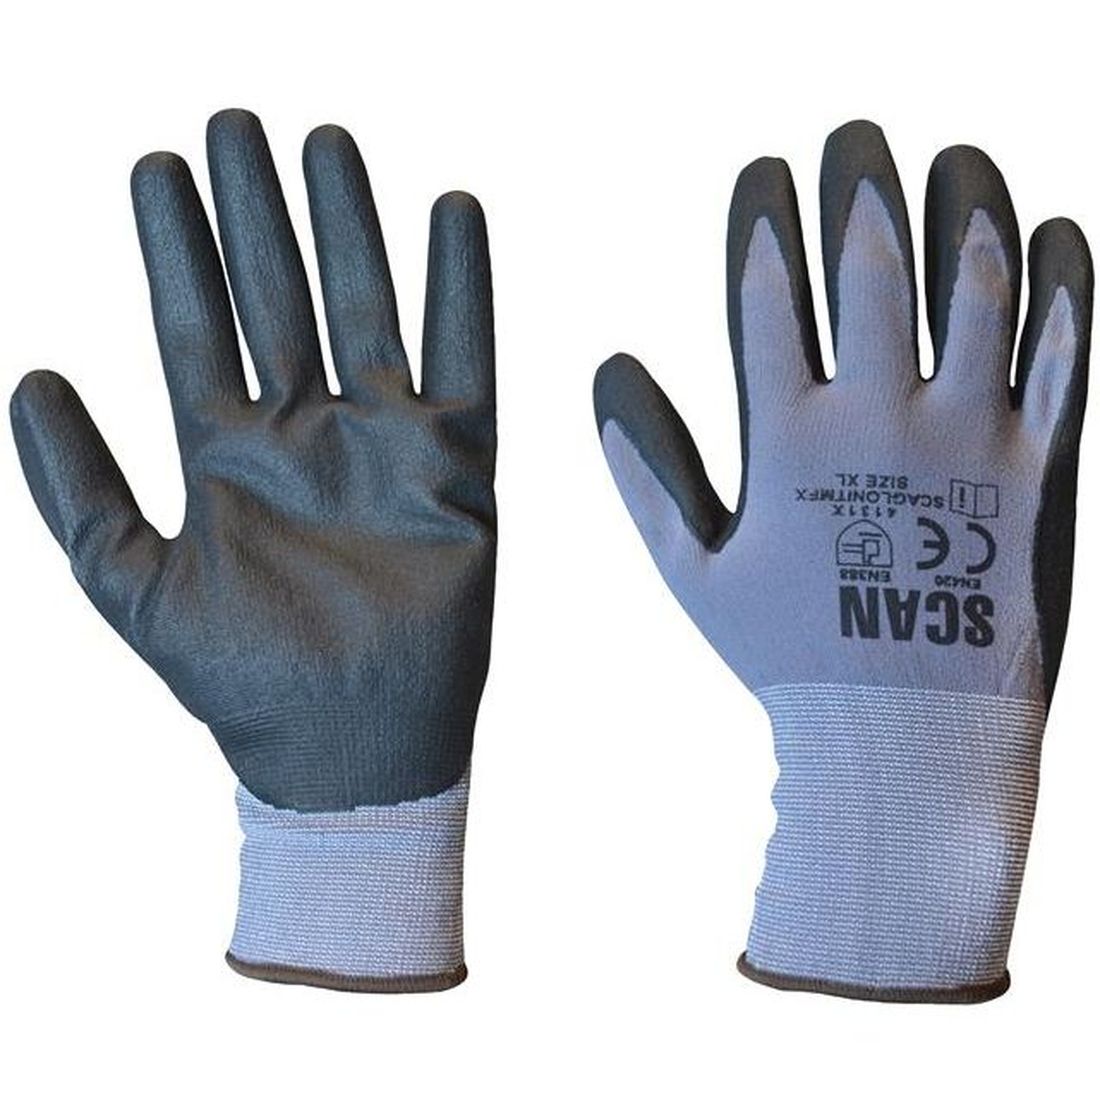 Scan Breathable Microfoam Nitrile Gloves - L (Size 9)                                